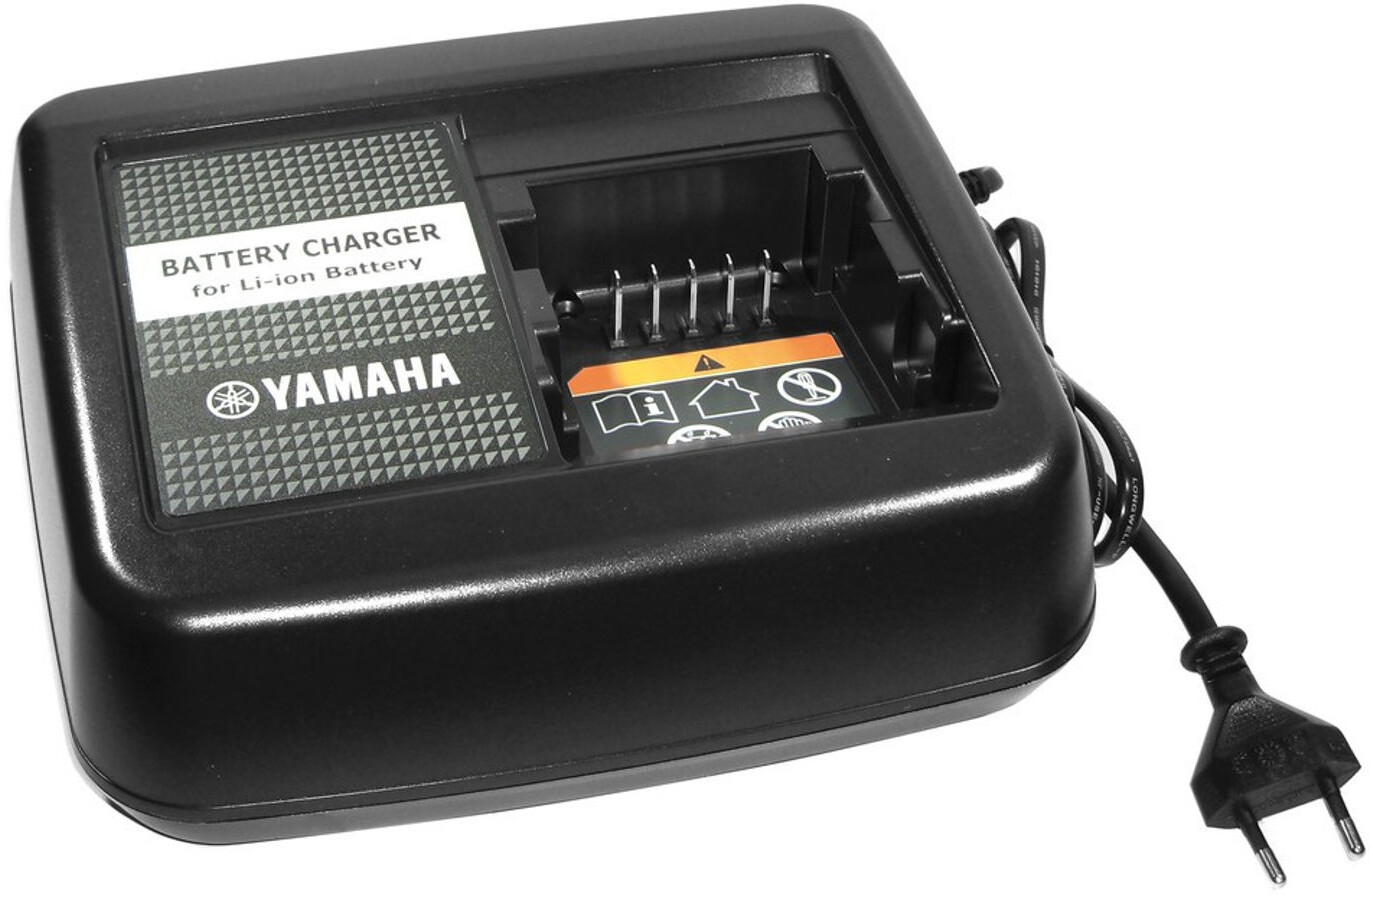 Зарядка стационарная. Yamaha Bicycle Battery. Зарядное устройство Yamaha. Стационарная зарядка. Батарея Yamaha для велосипеда.